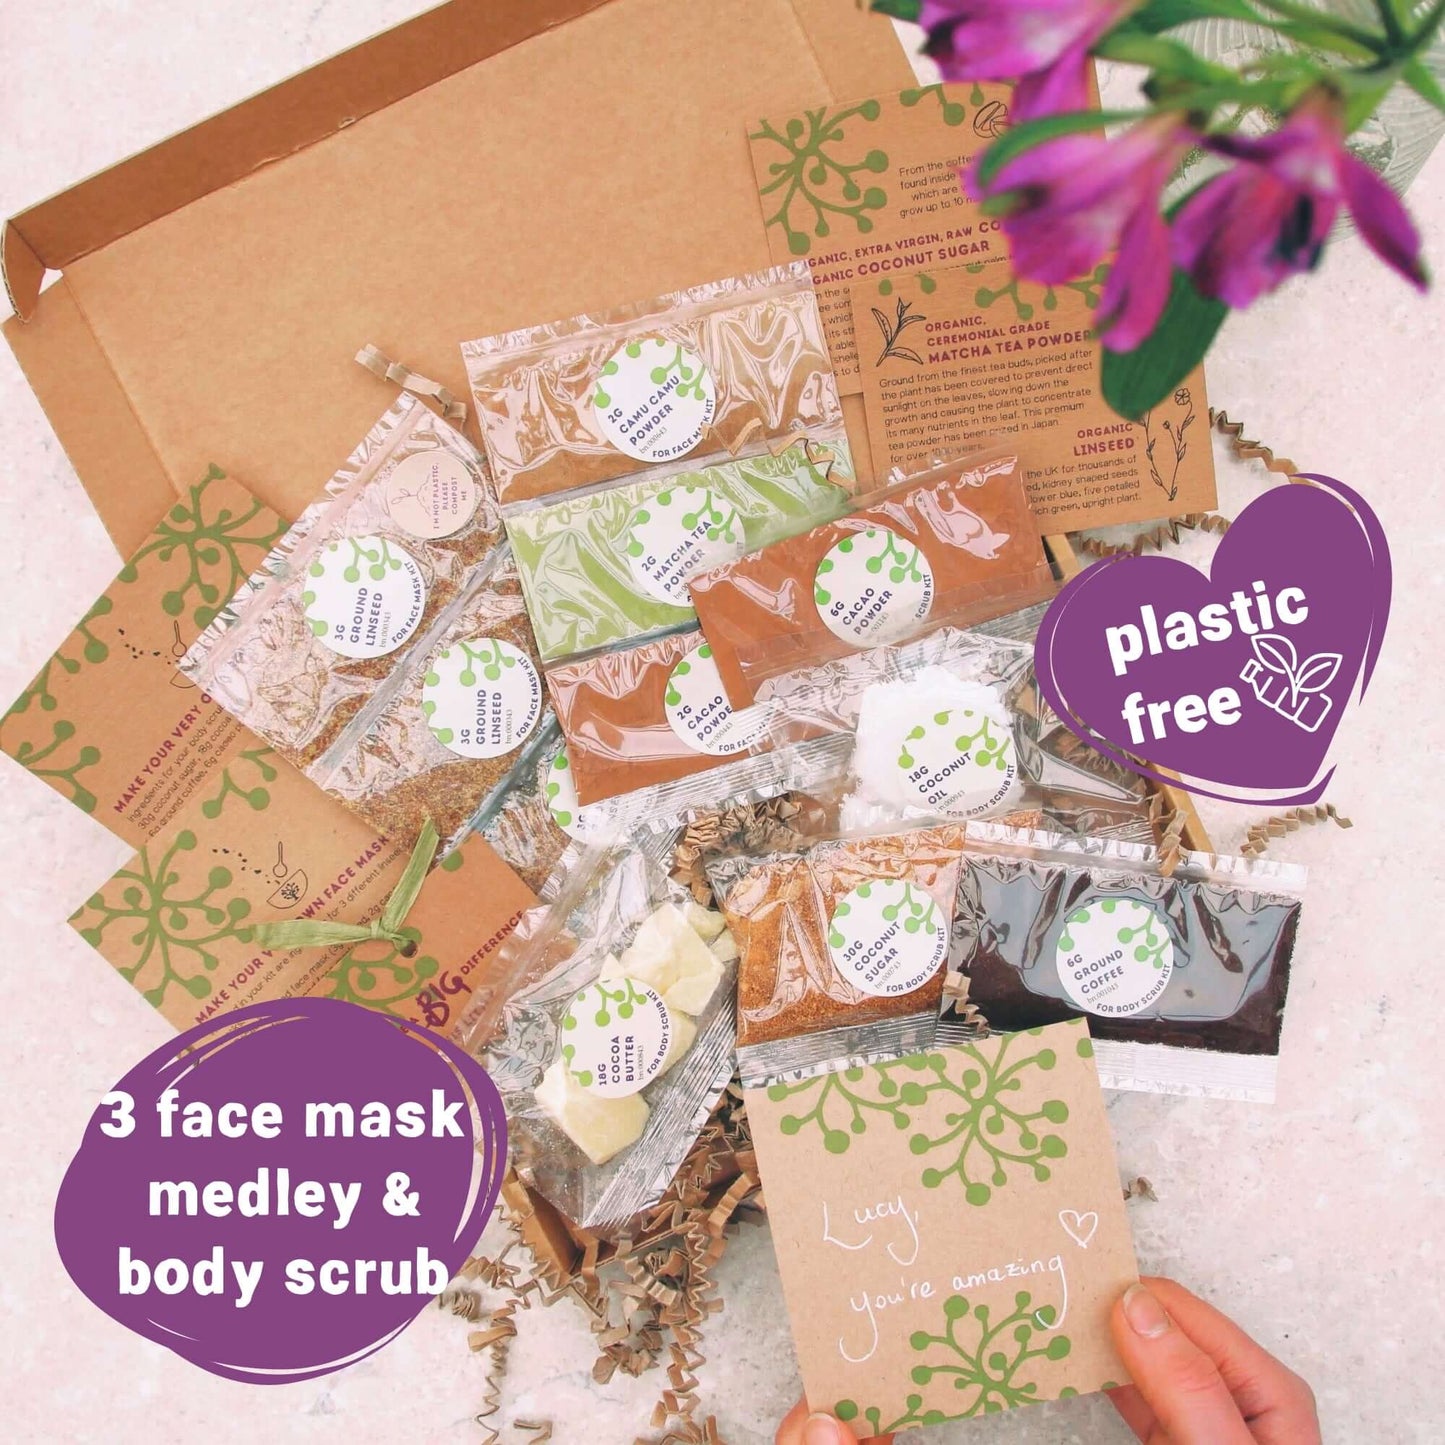 organic vegan ingredients packaged in eco-friendly packaging inside 21st birthday letterbox gift